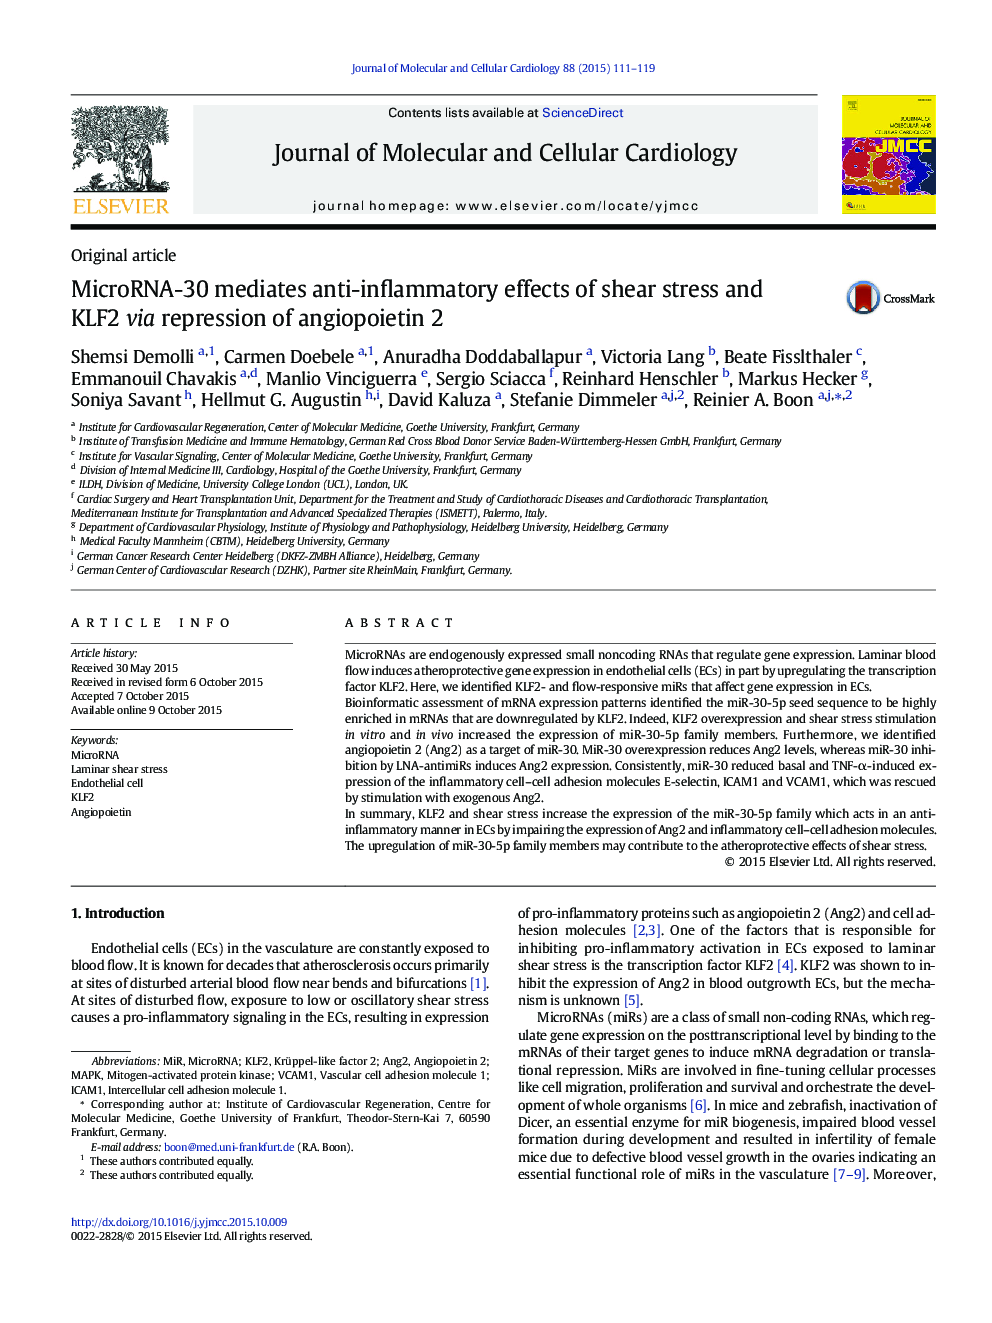 MicroRNA-30 mediates anti-inflammatory effects of shear stress and KLF2 via repression of angiopoietin 2